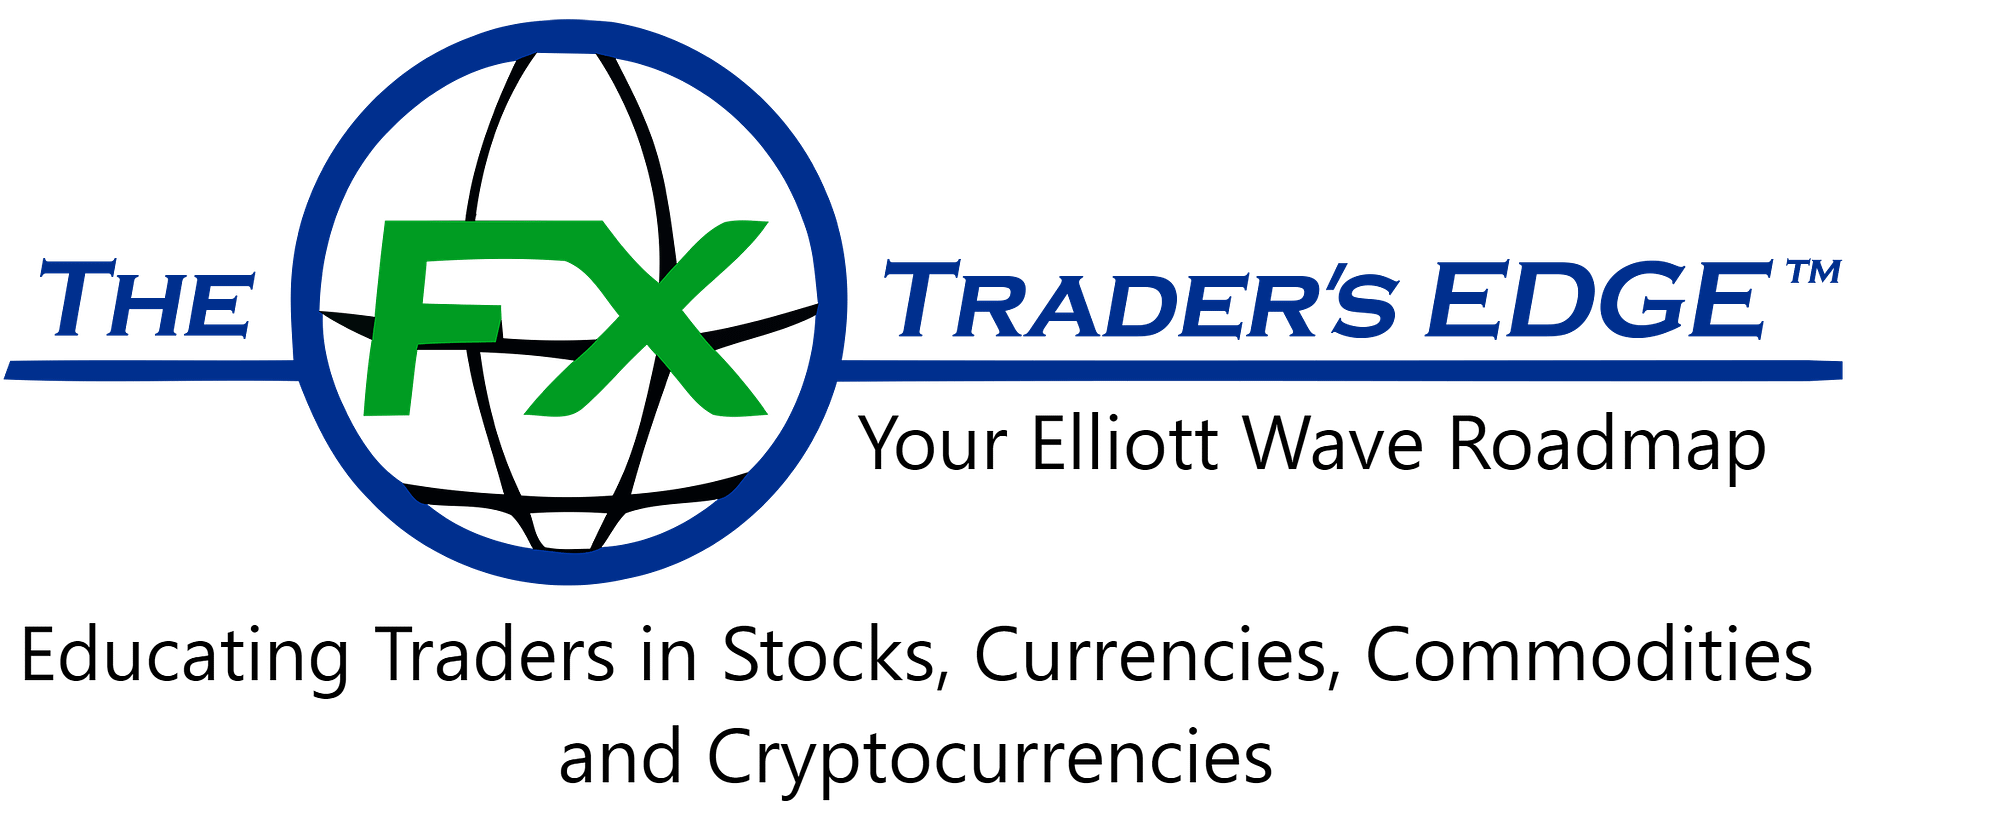 Visit the FX Trader's Edge/WavyTunnel website